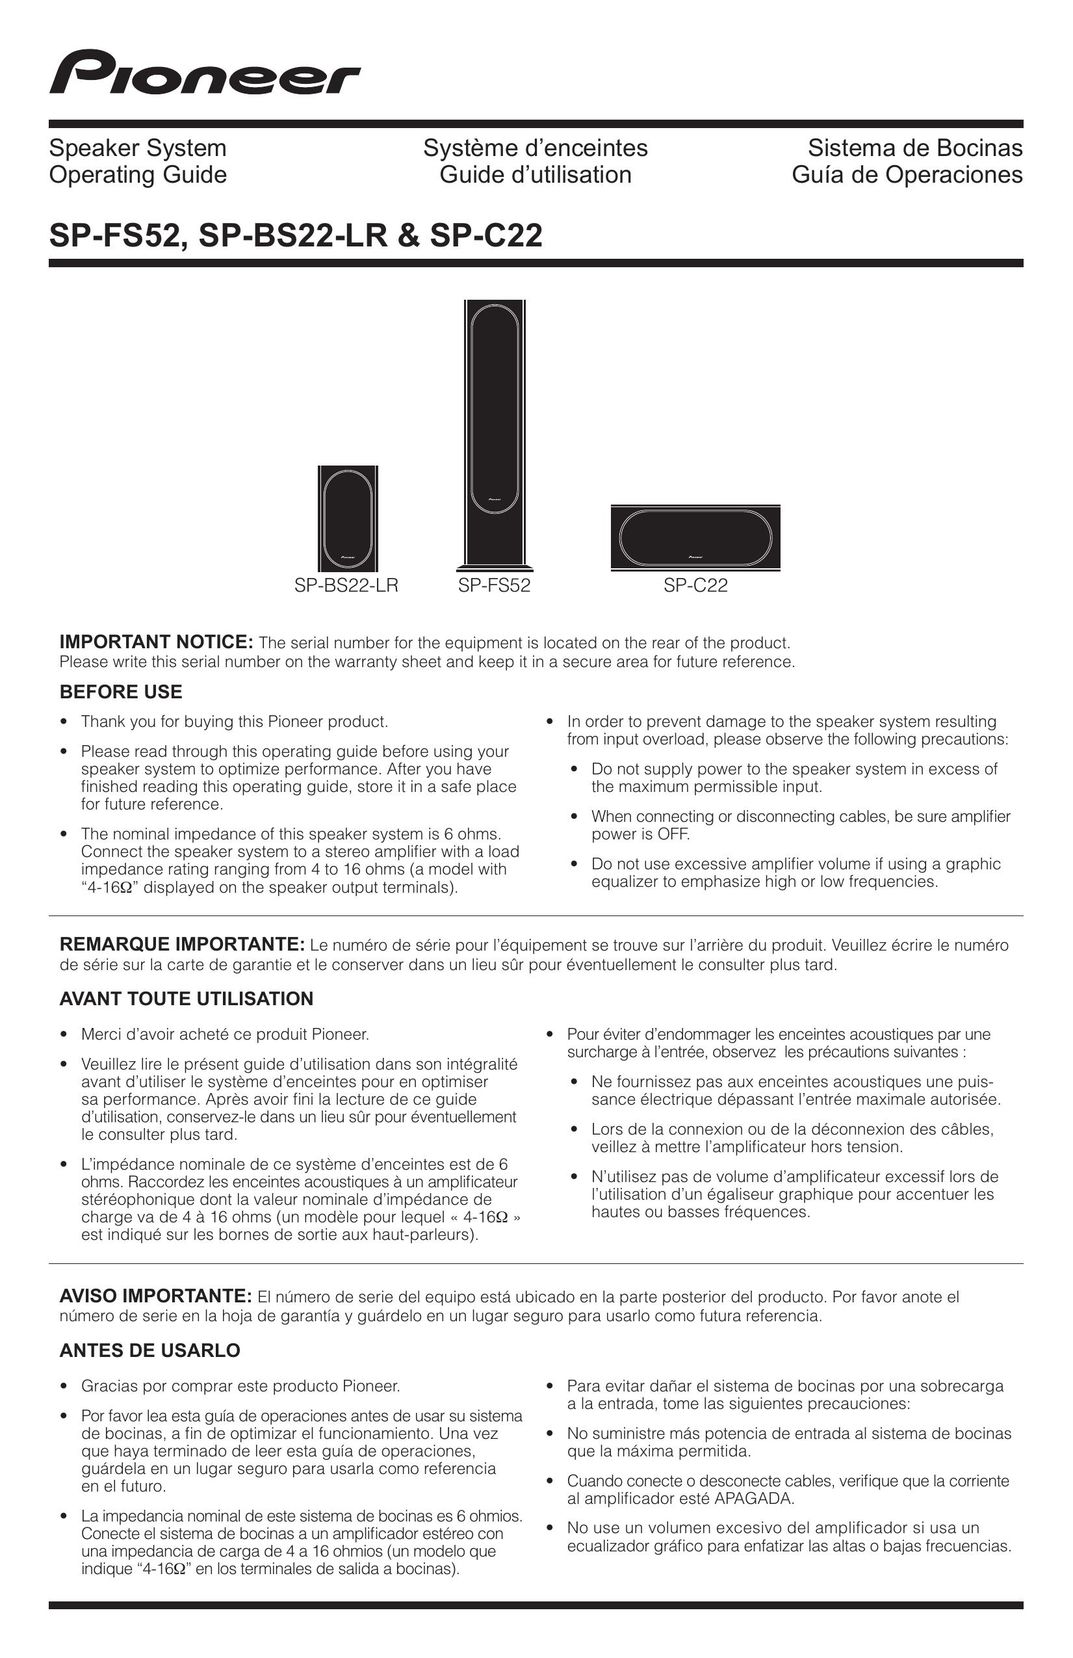 Pioneer SP-C22 Car Speaker User Manual